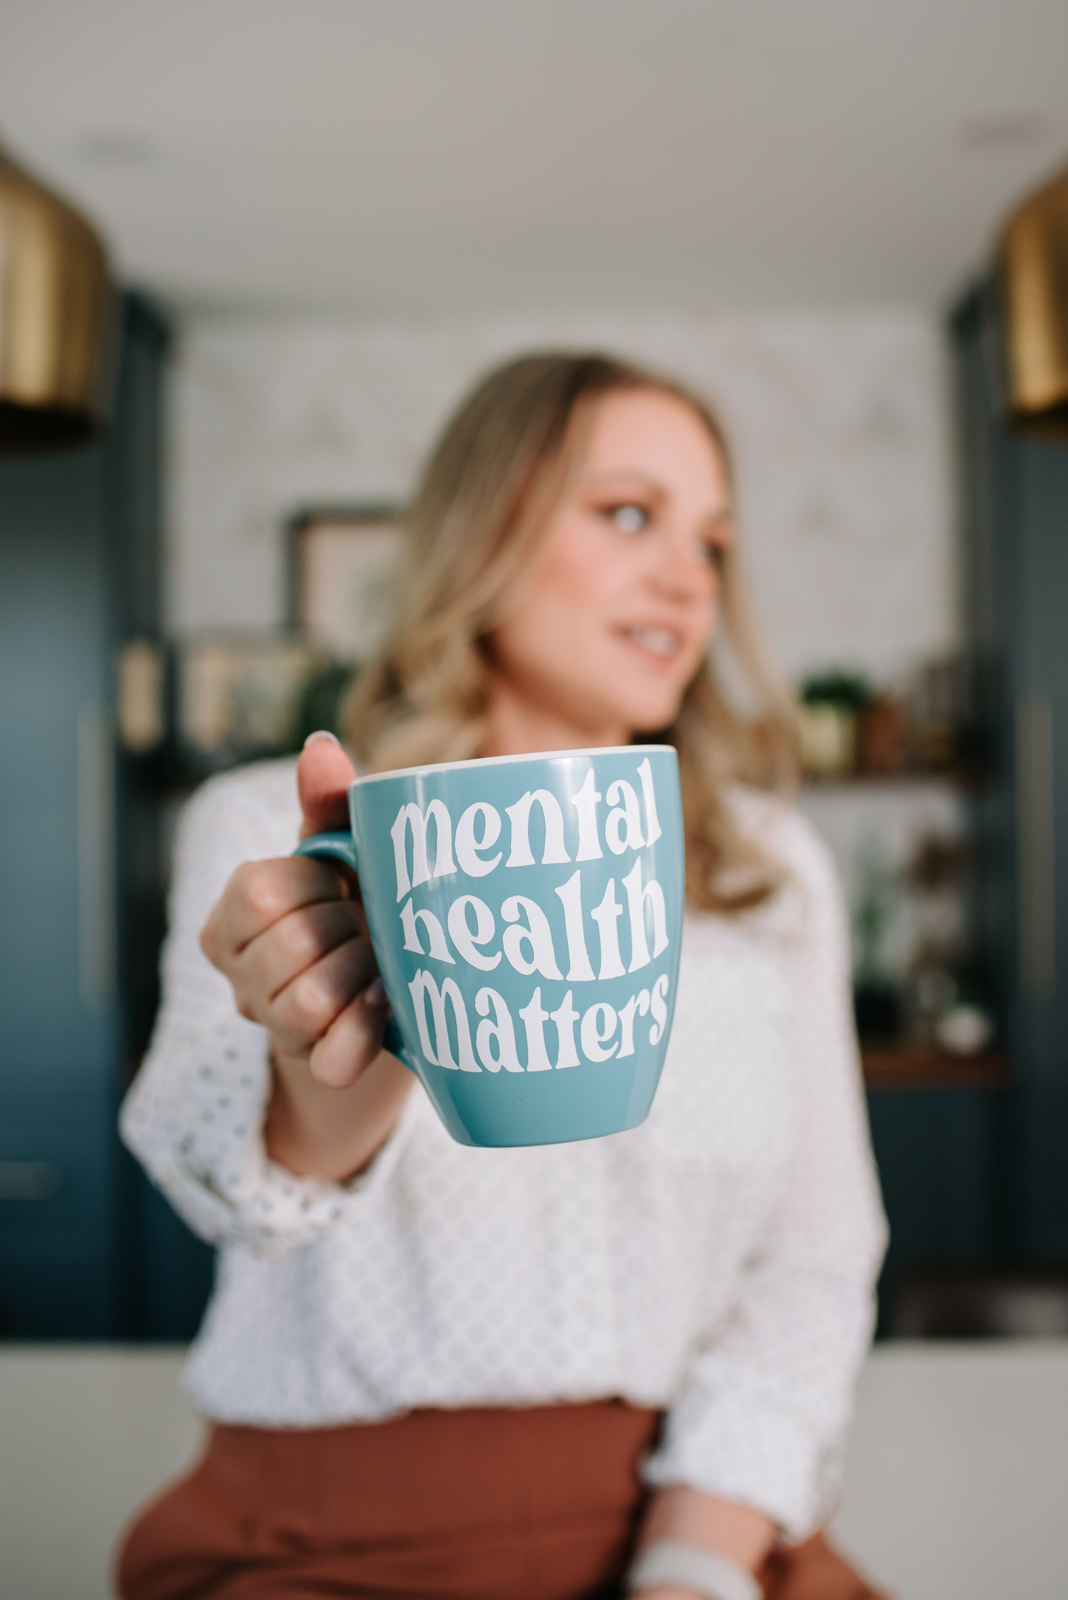 ottawa psychotherapist with coffee mug that says "mental health matters"